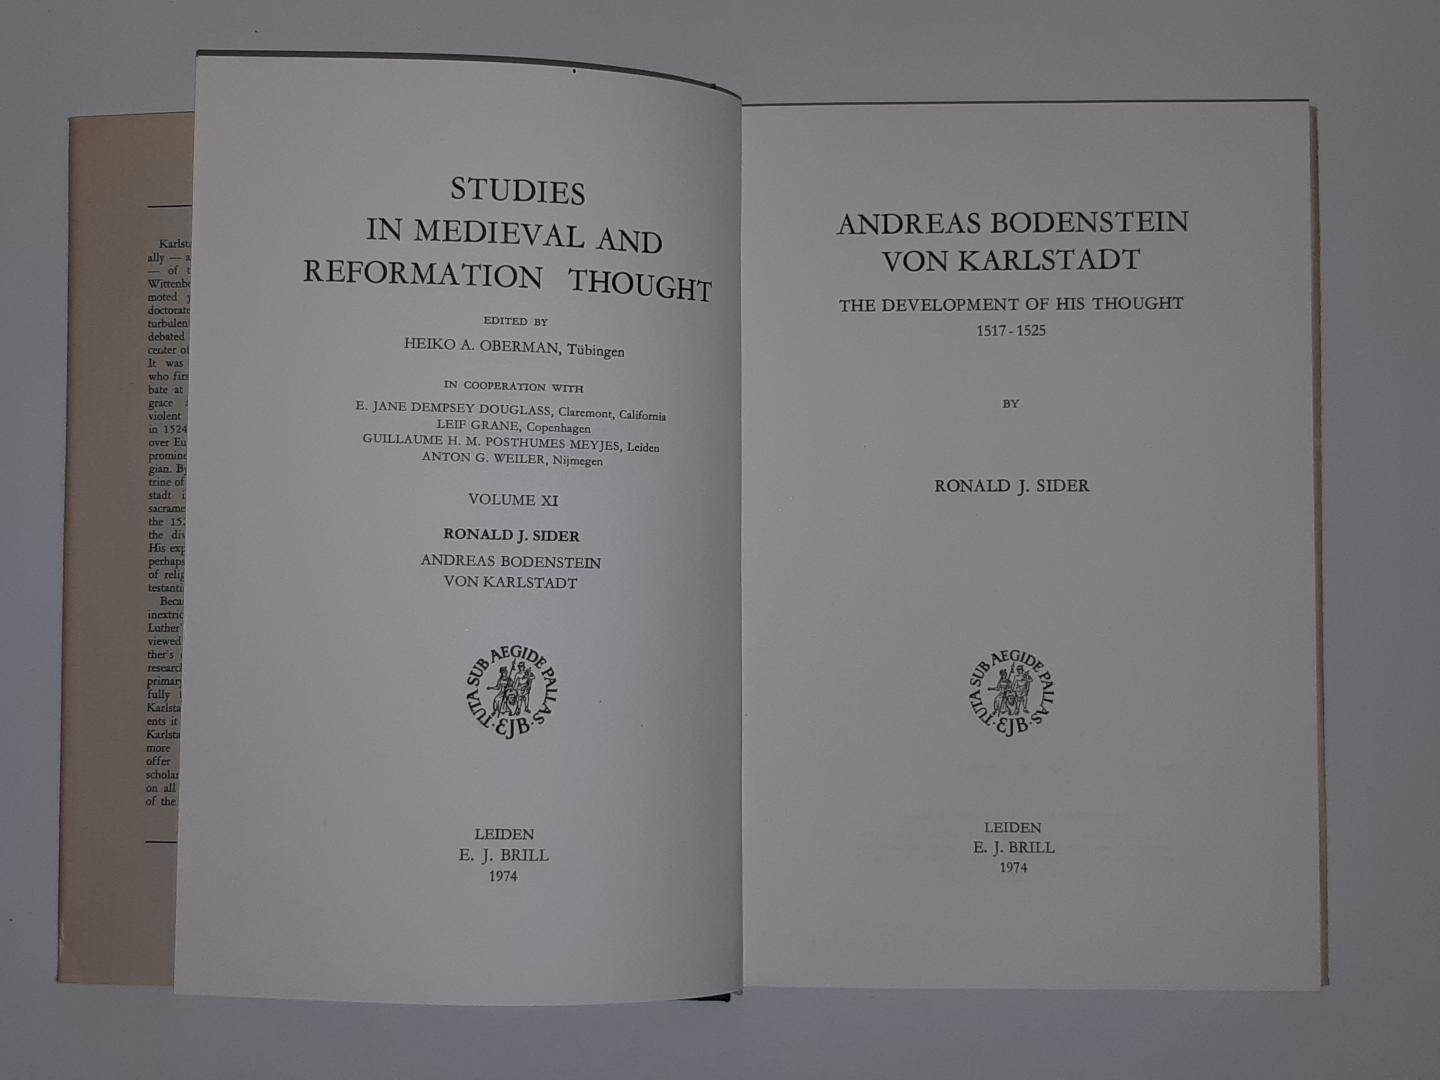 Sider, Ronald J. - Andreas Bodenstein von Karlstadt. The development of his thought 1517-1525